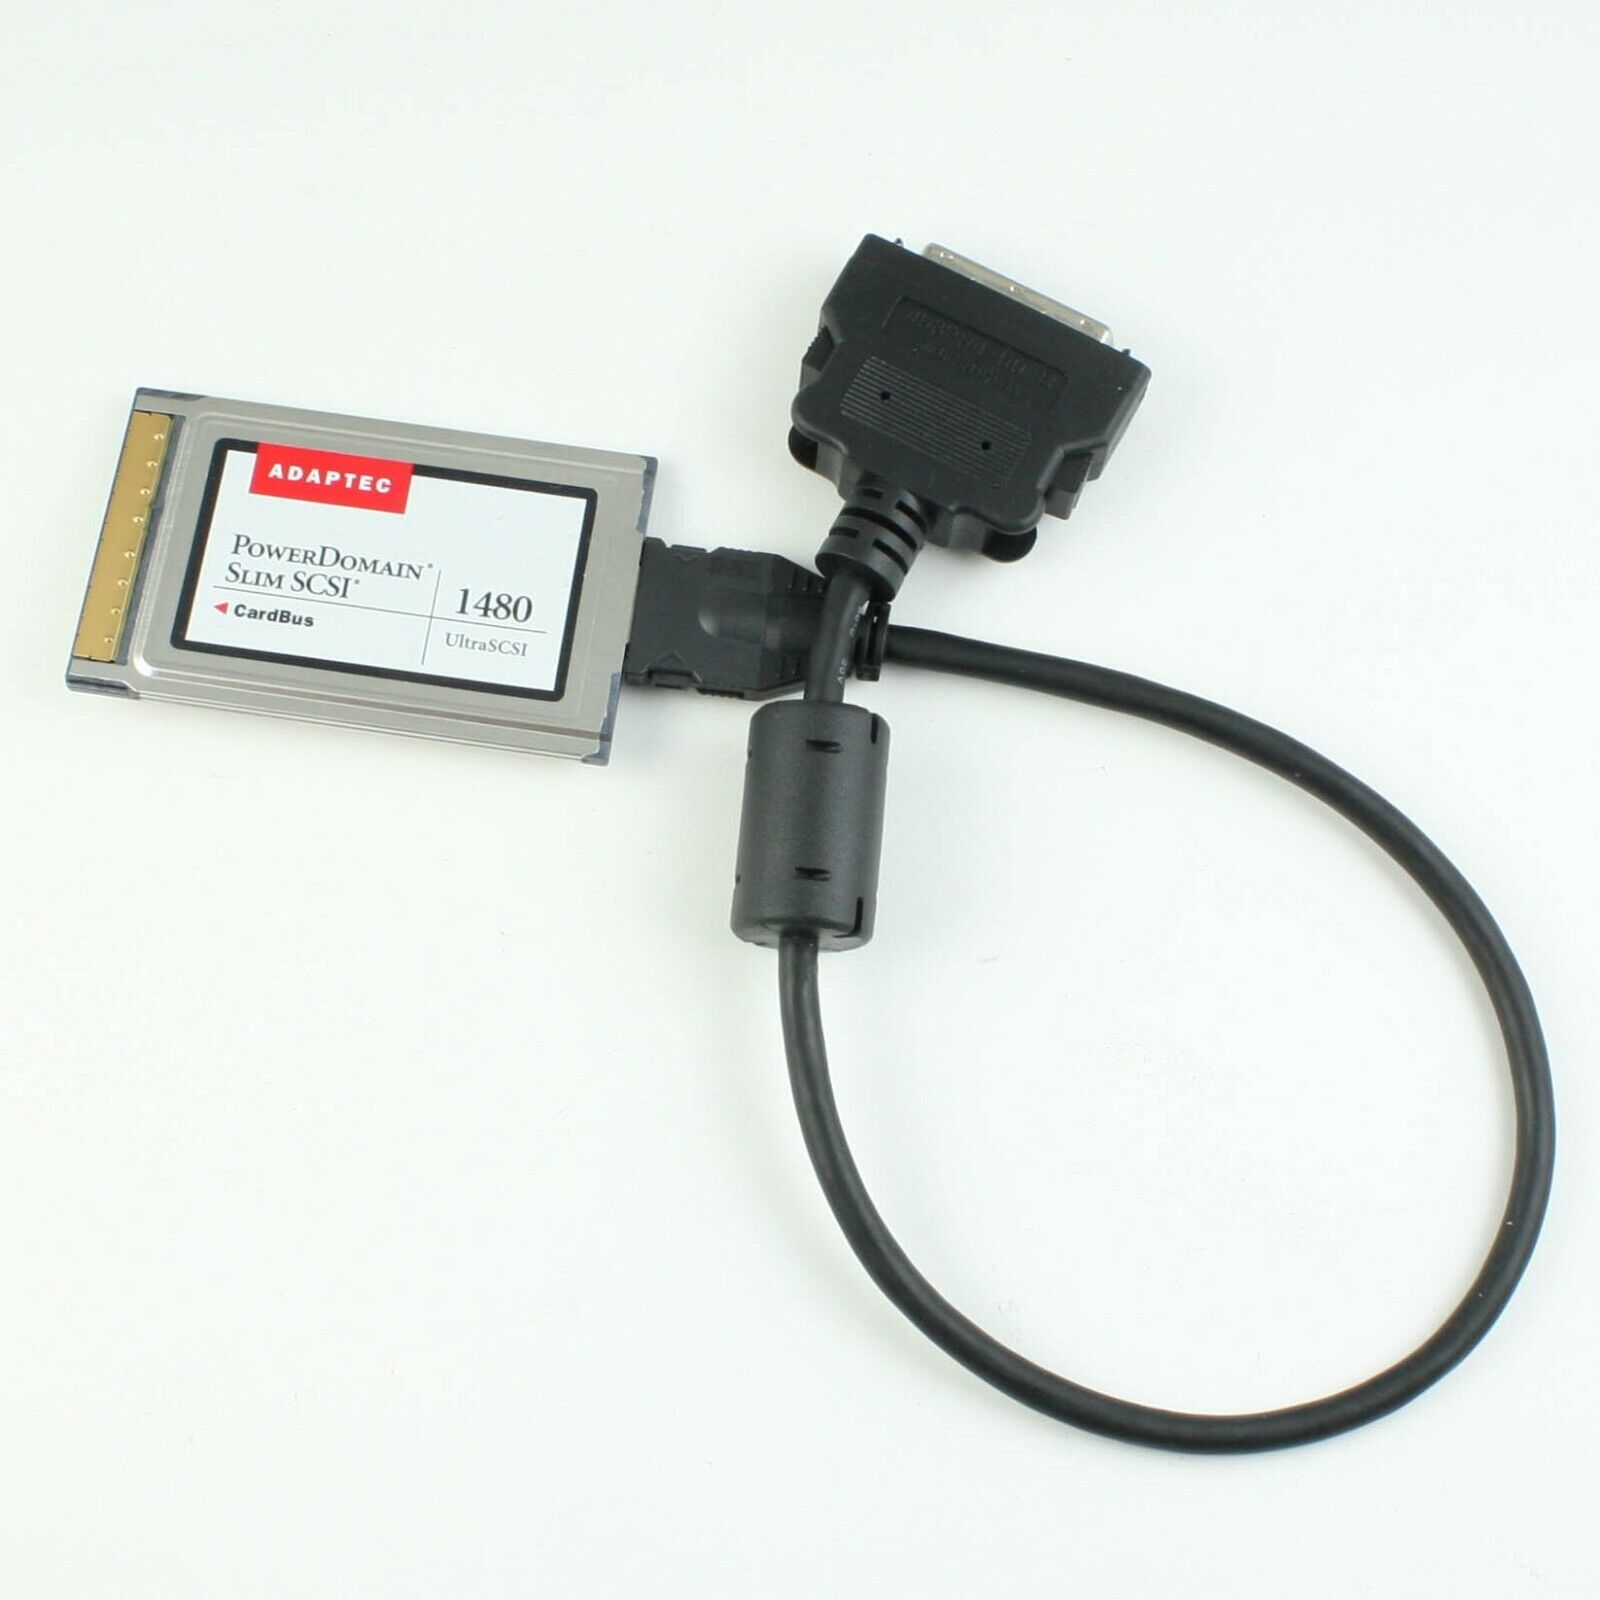 Adaptec PowerDomain Slim SCSI 1480 CardBus + Cable - PowerBook Apple - UNTESTED